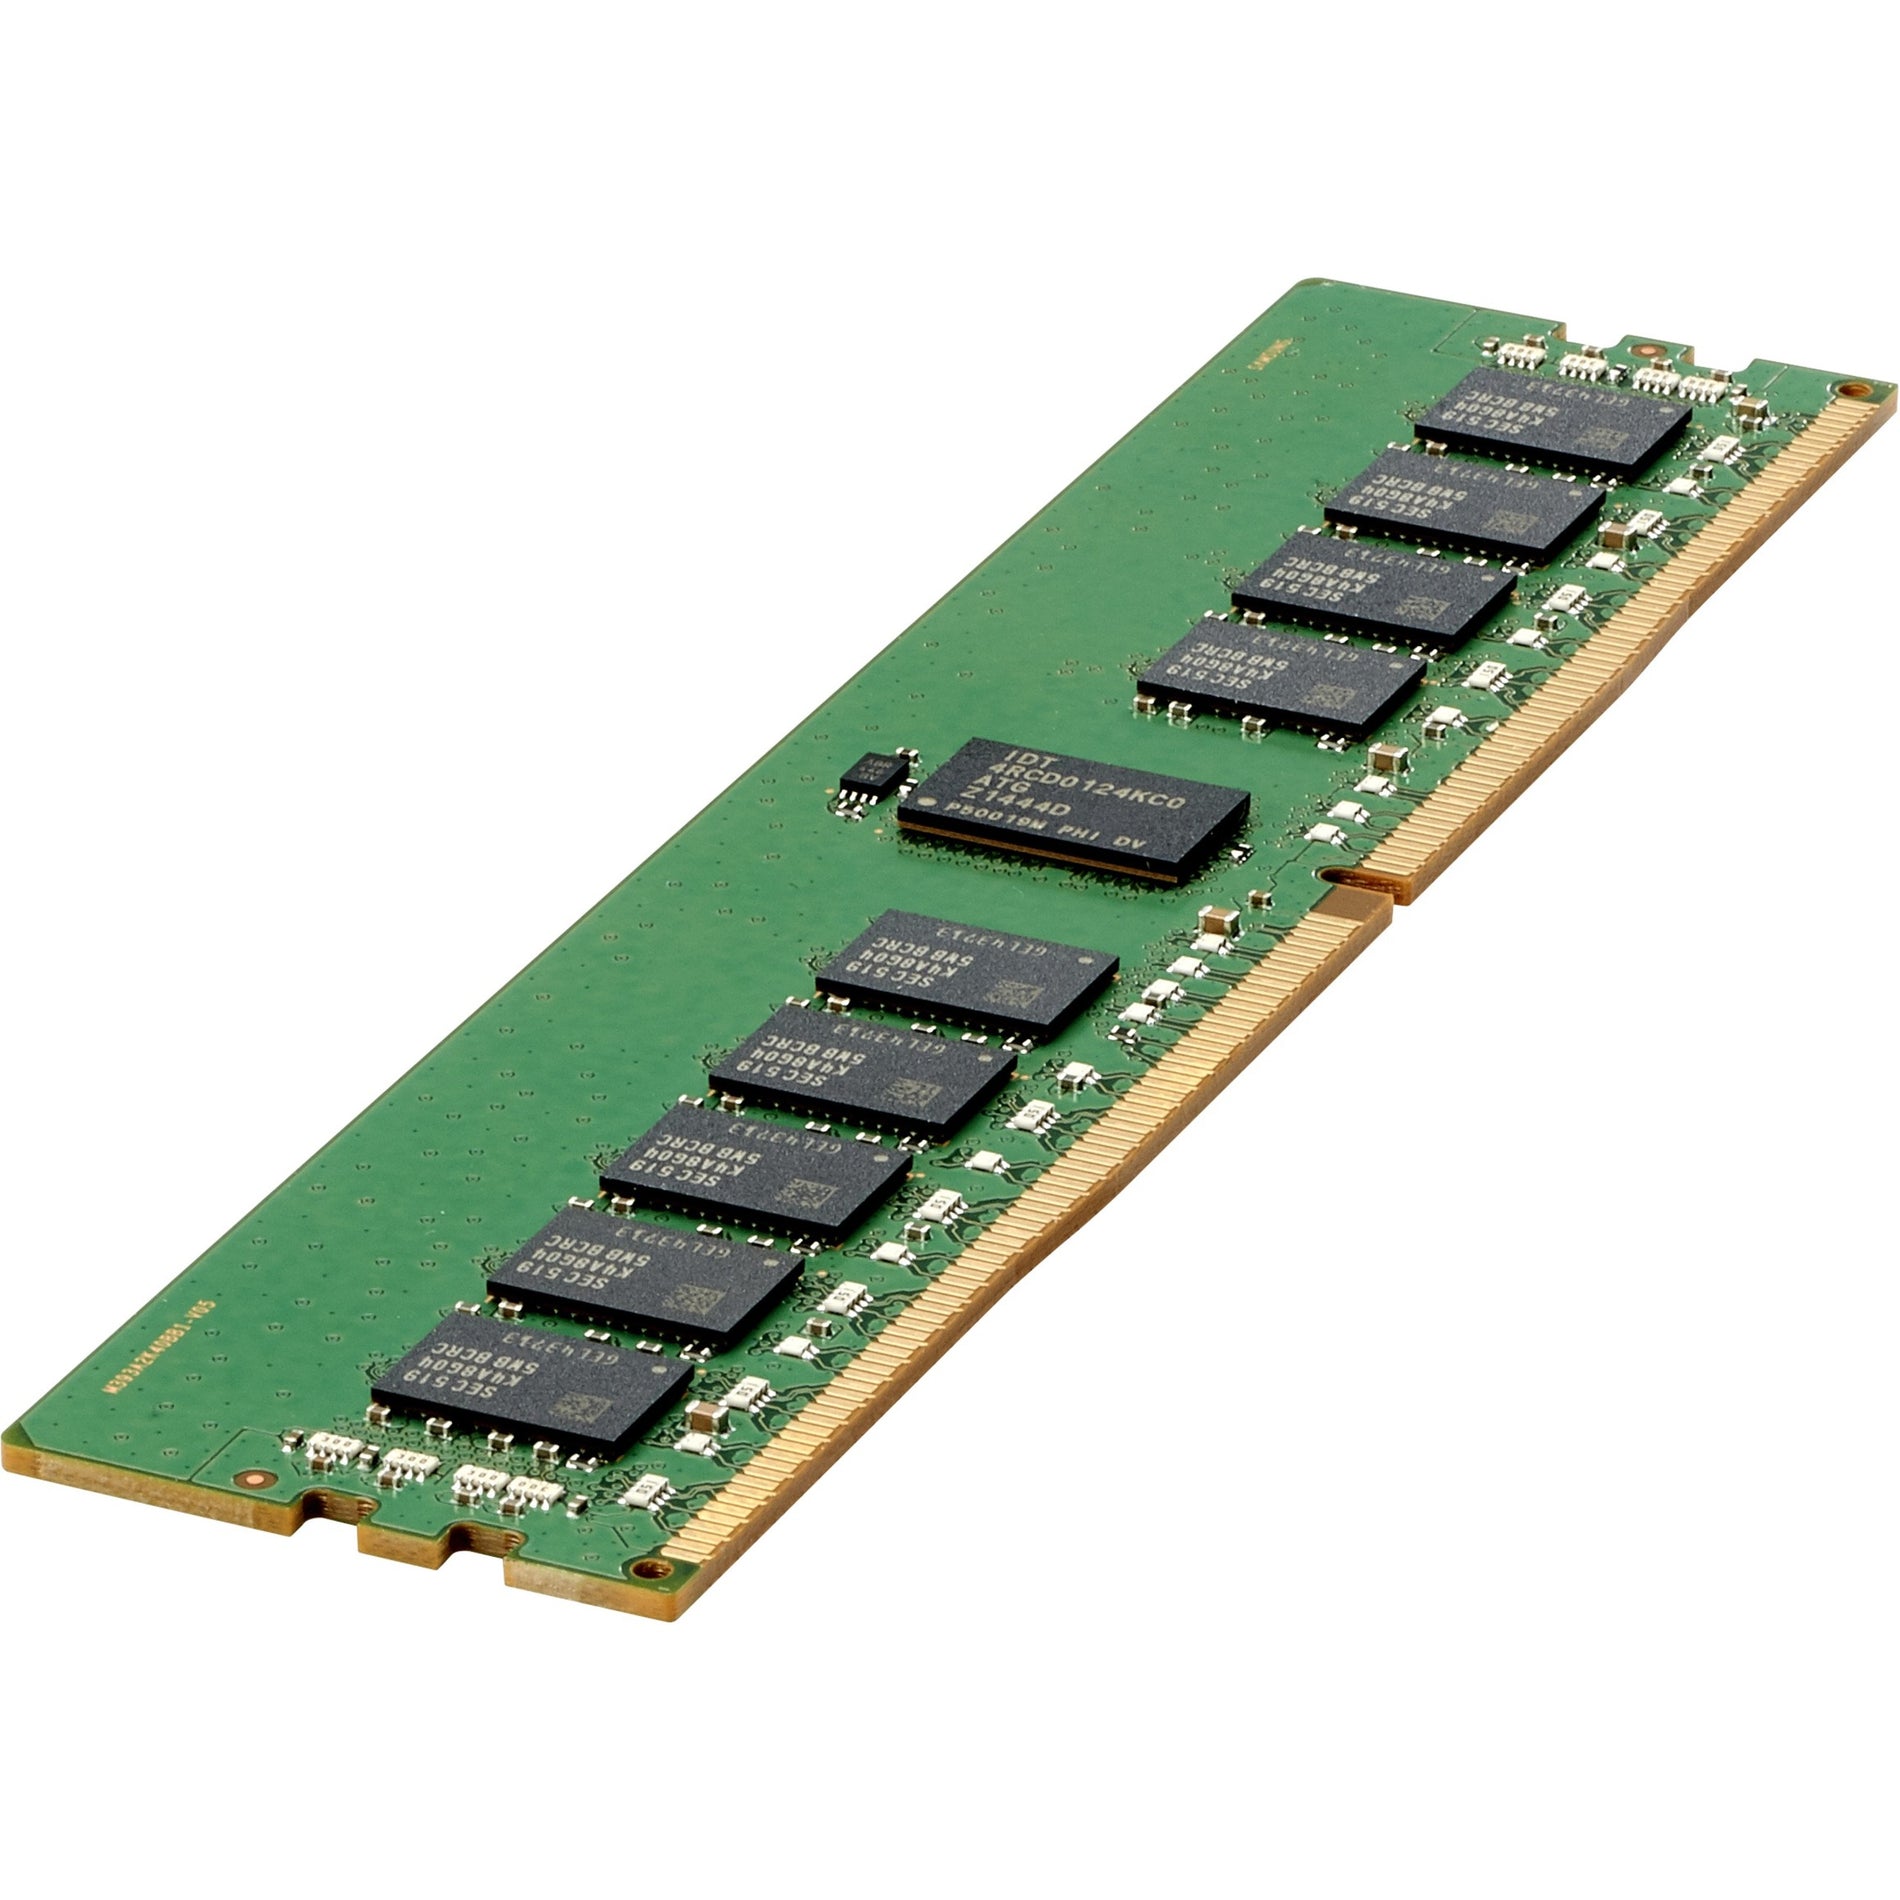 HPE 815100-B21 SmartMemory 32GB DDR4 SDRAM Memory Module, High Performance RAM for Servers